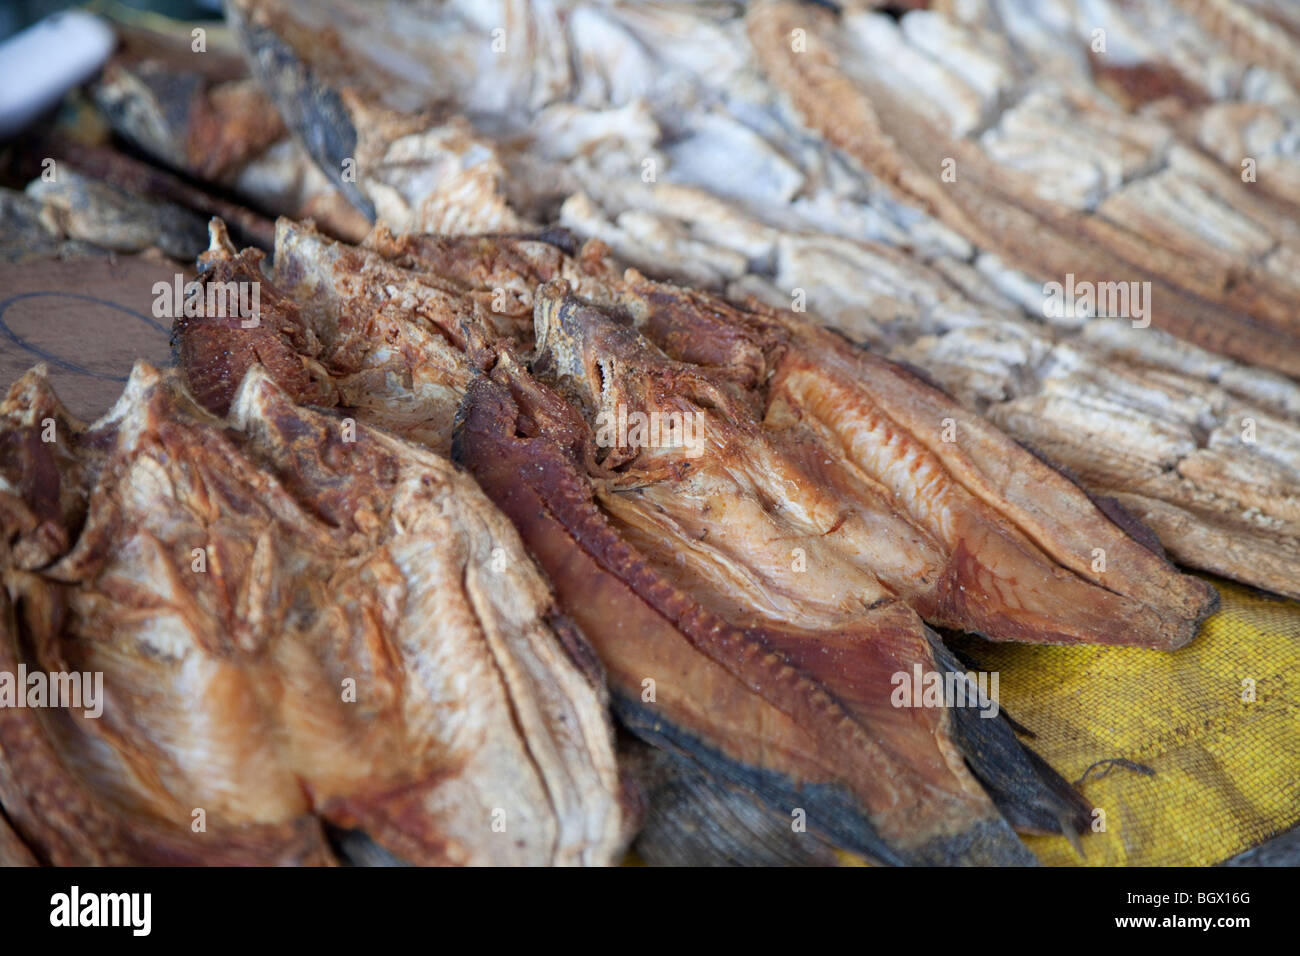 The Mercado Central in the Baixa district, dried fish, Maputo, Mozambique Stock Photo